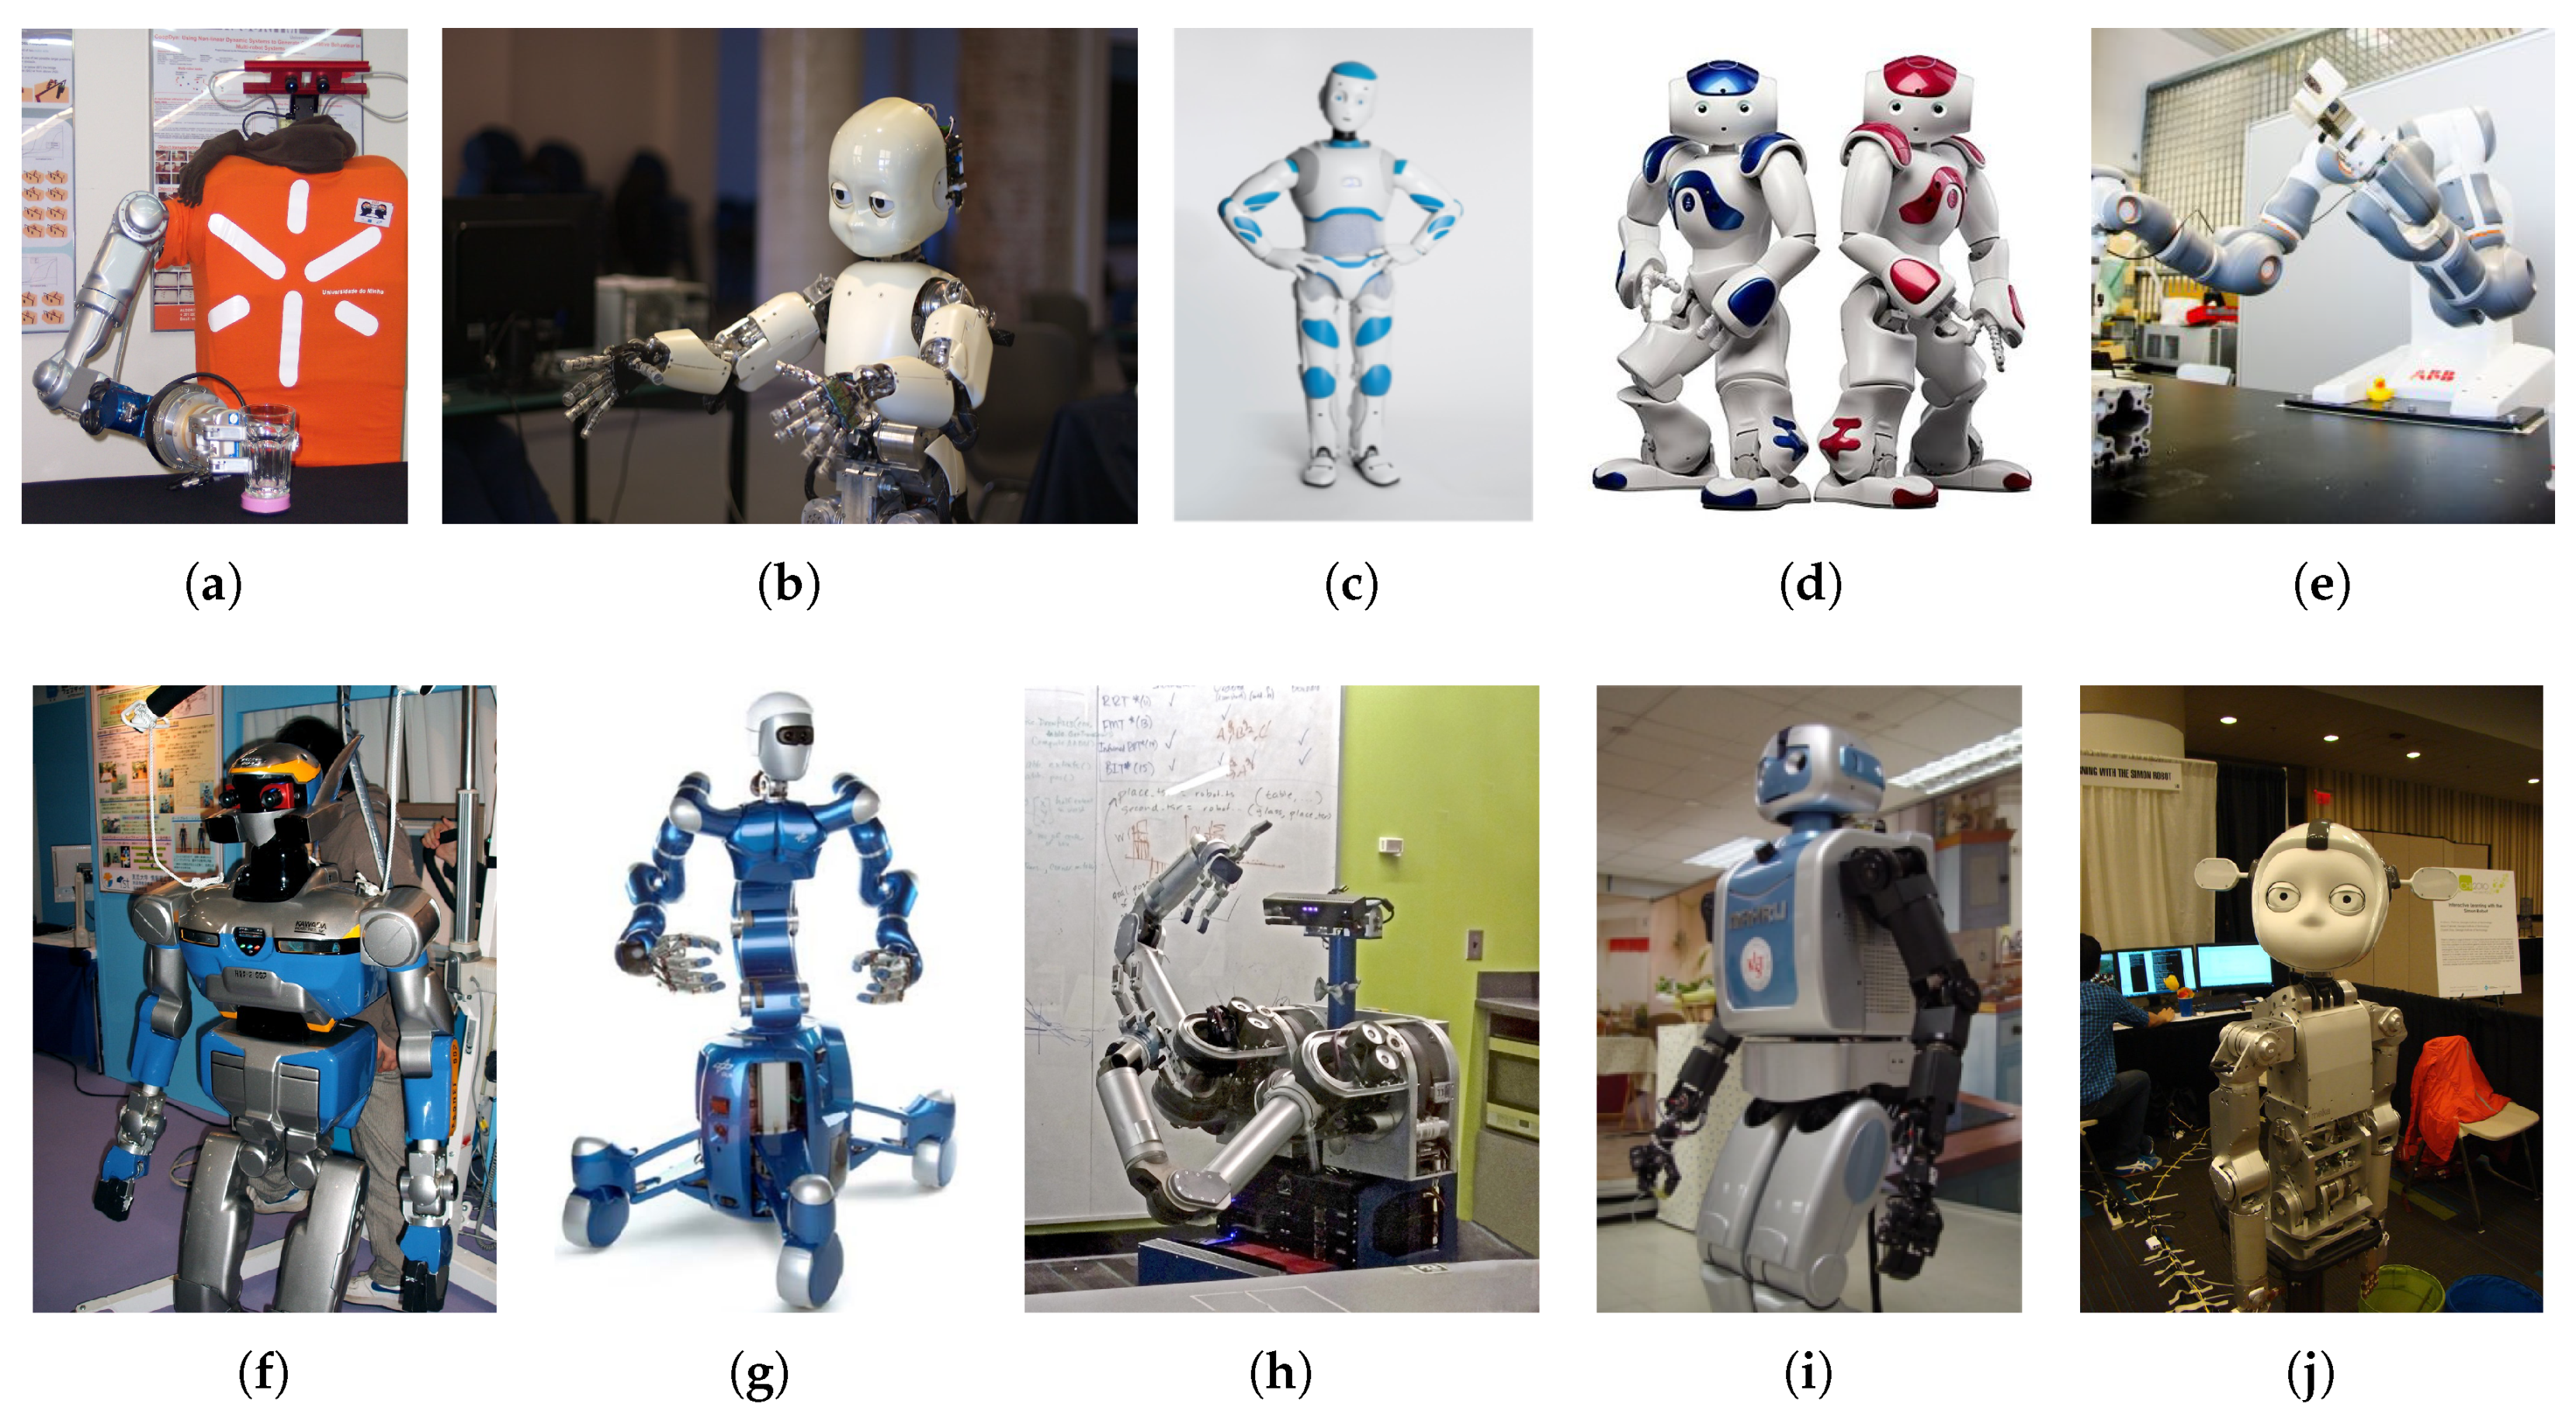 Speedy robo-gripper reflexively organizes cluttered spaces, MIT News